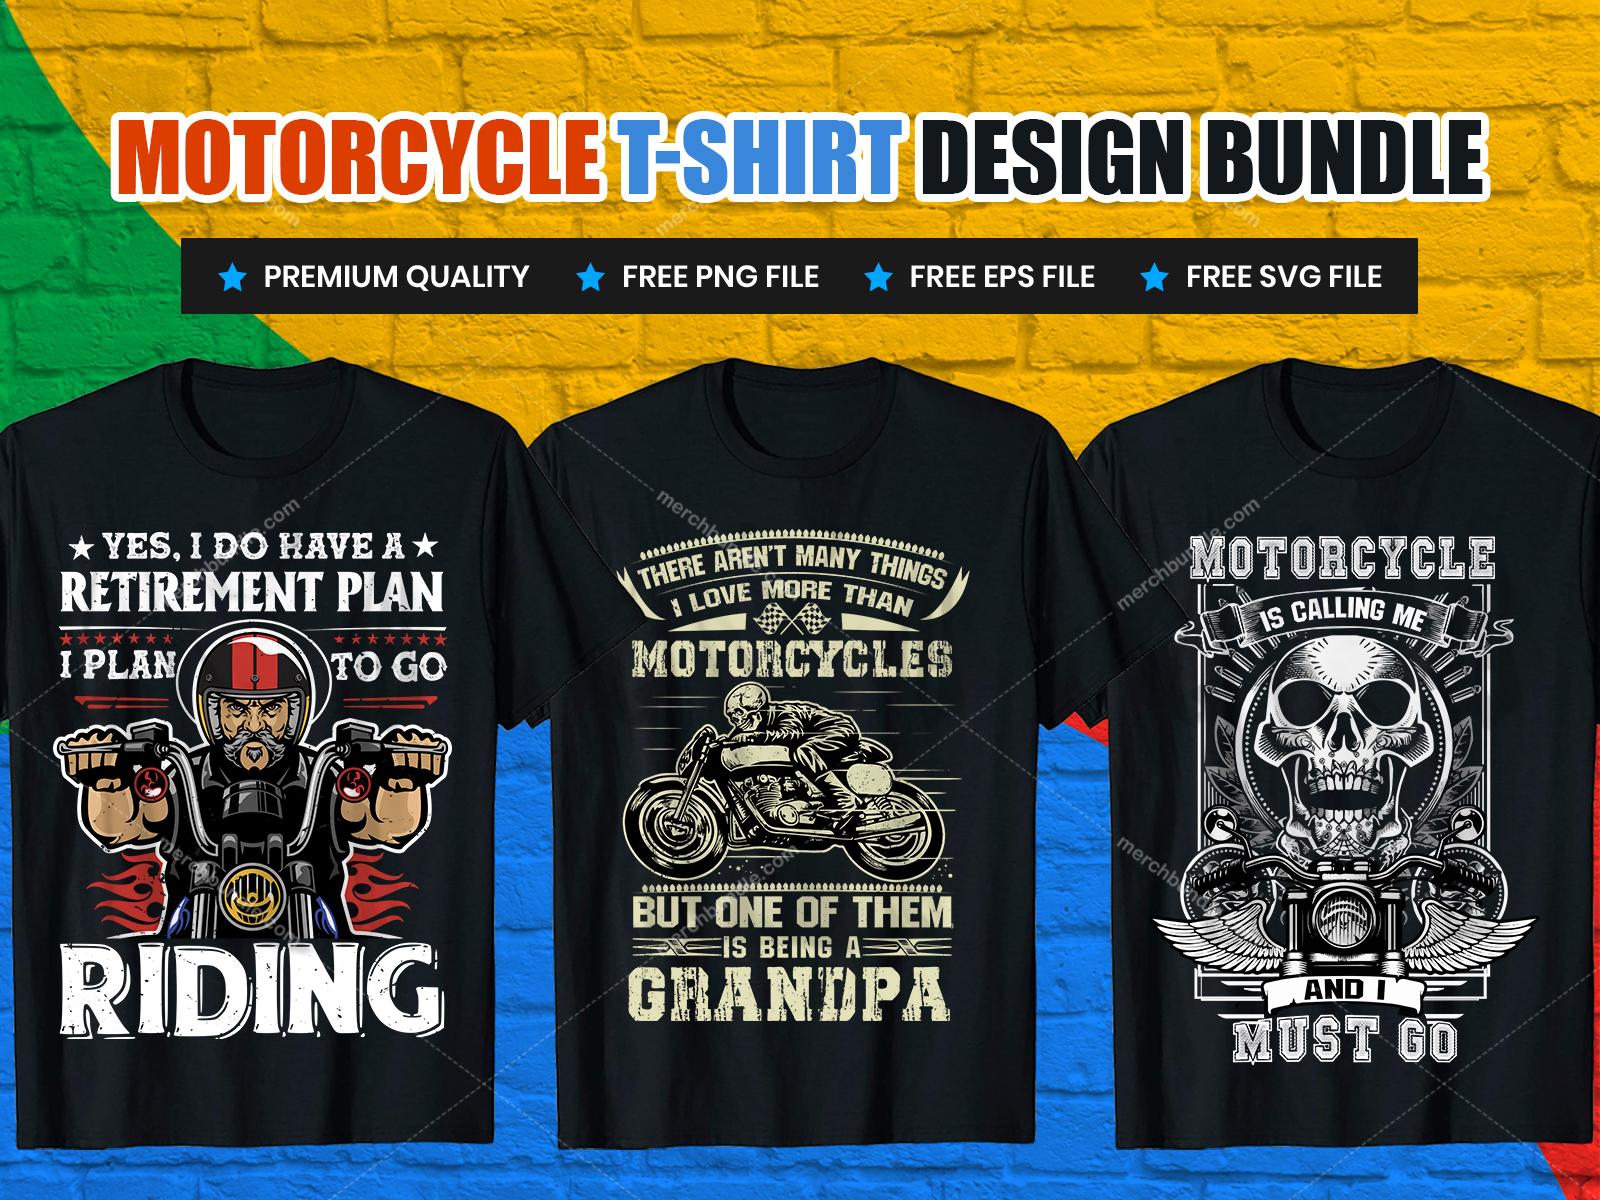 bikers t shirt design